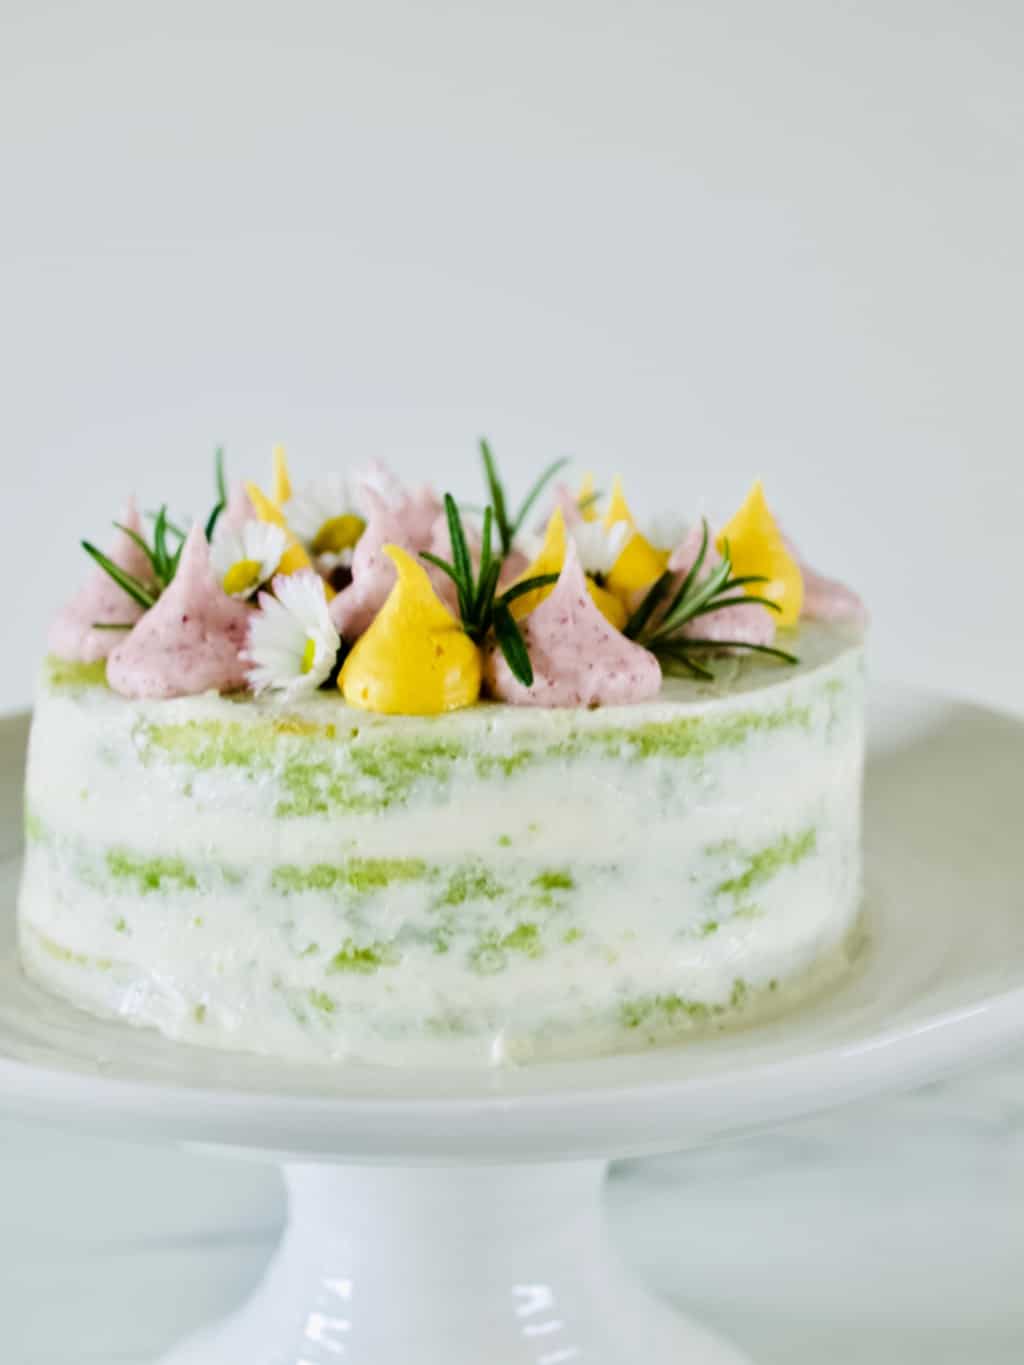 Spring-inspired celebration cake (with sweet peas) recipe